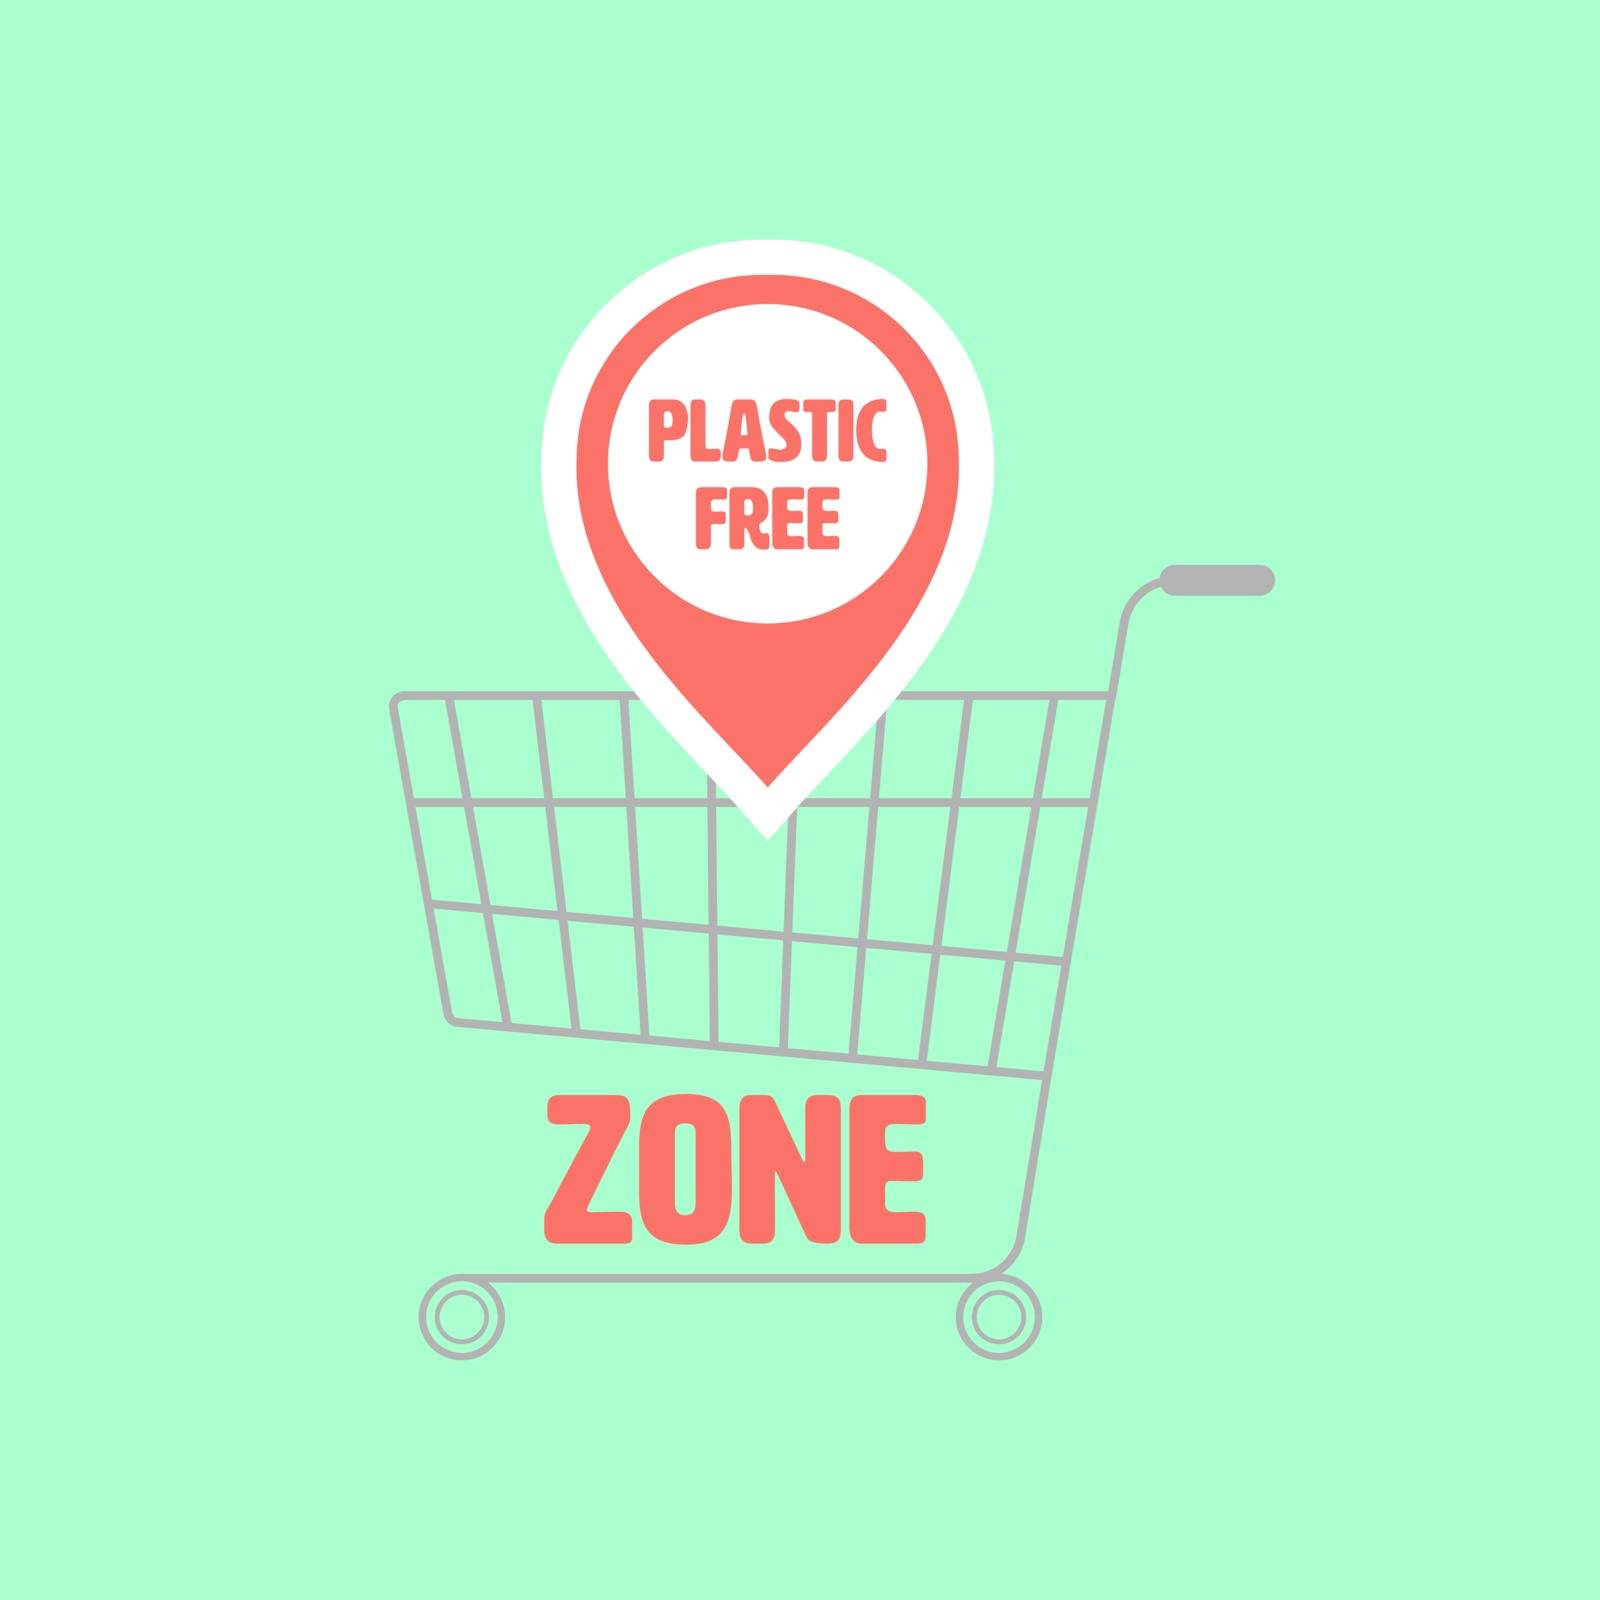 Plastic Free Zone by Chiamsakul